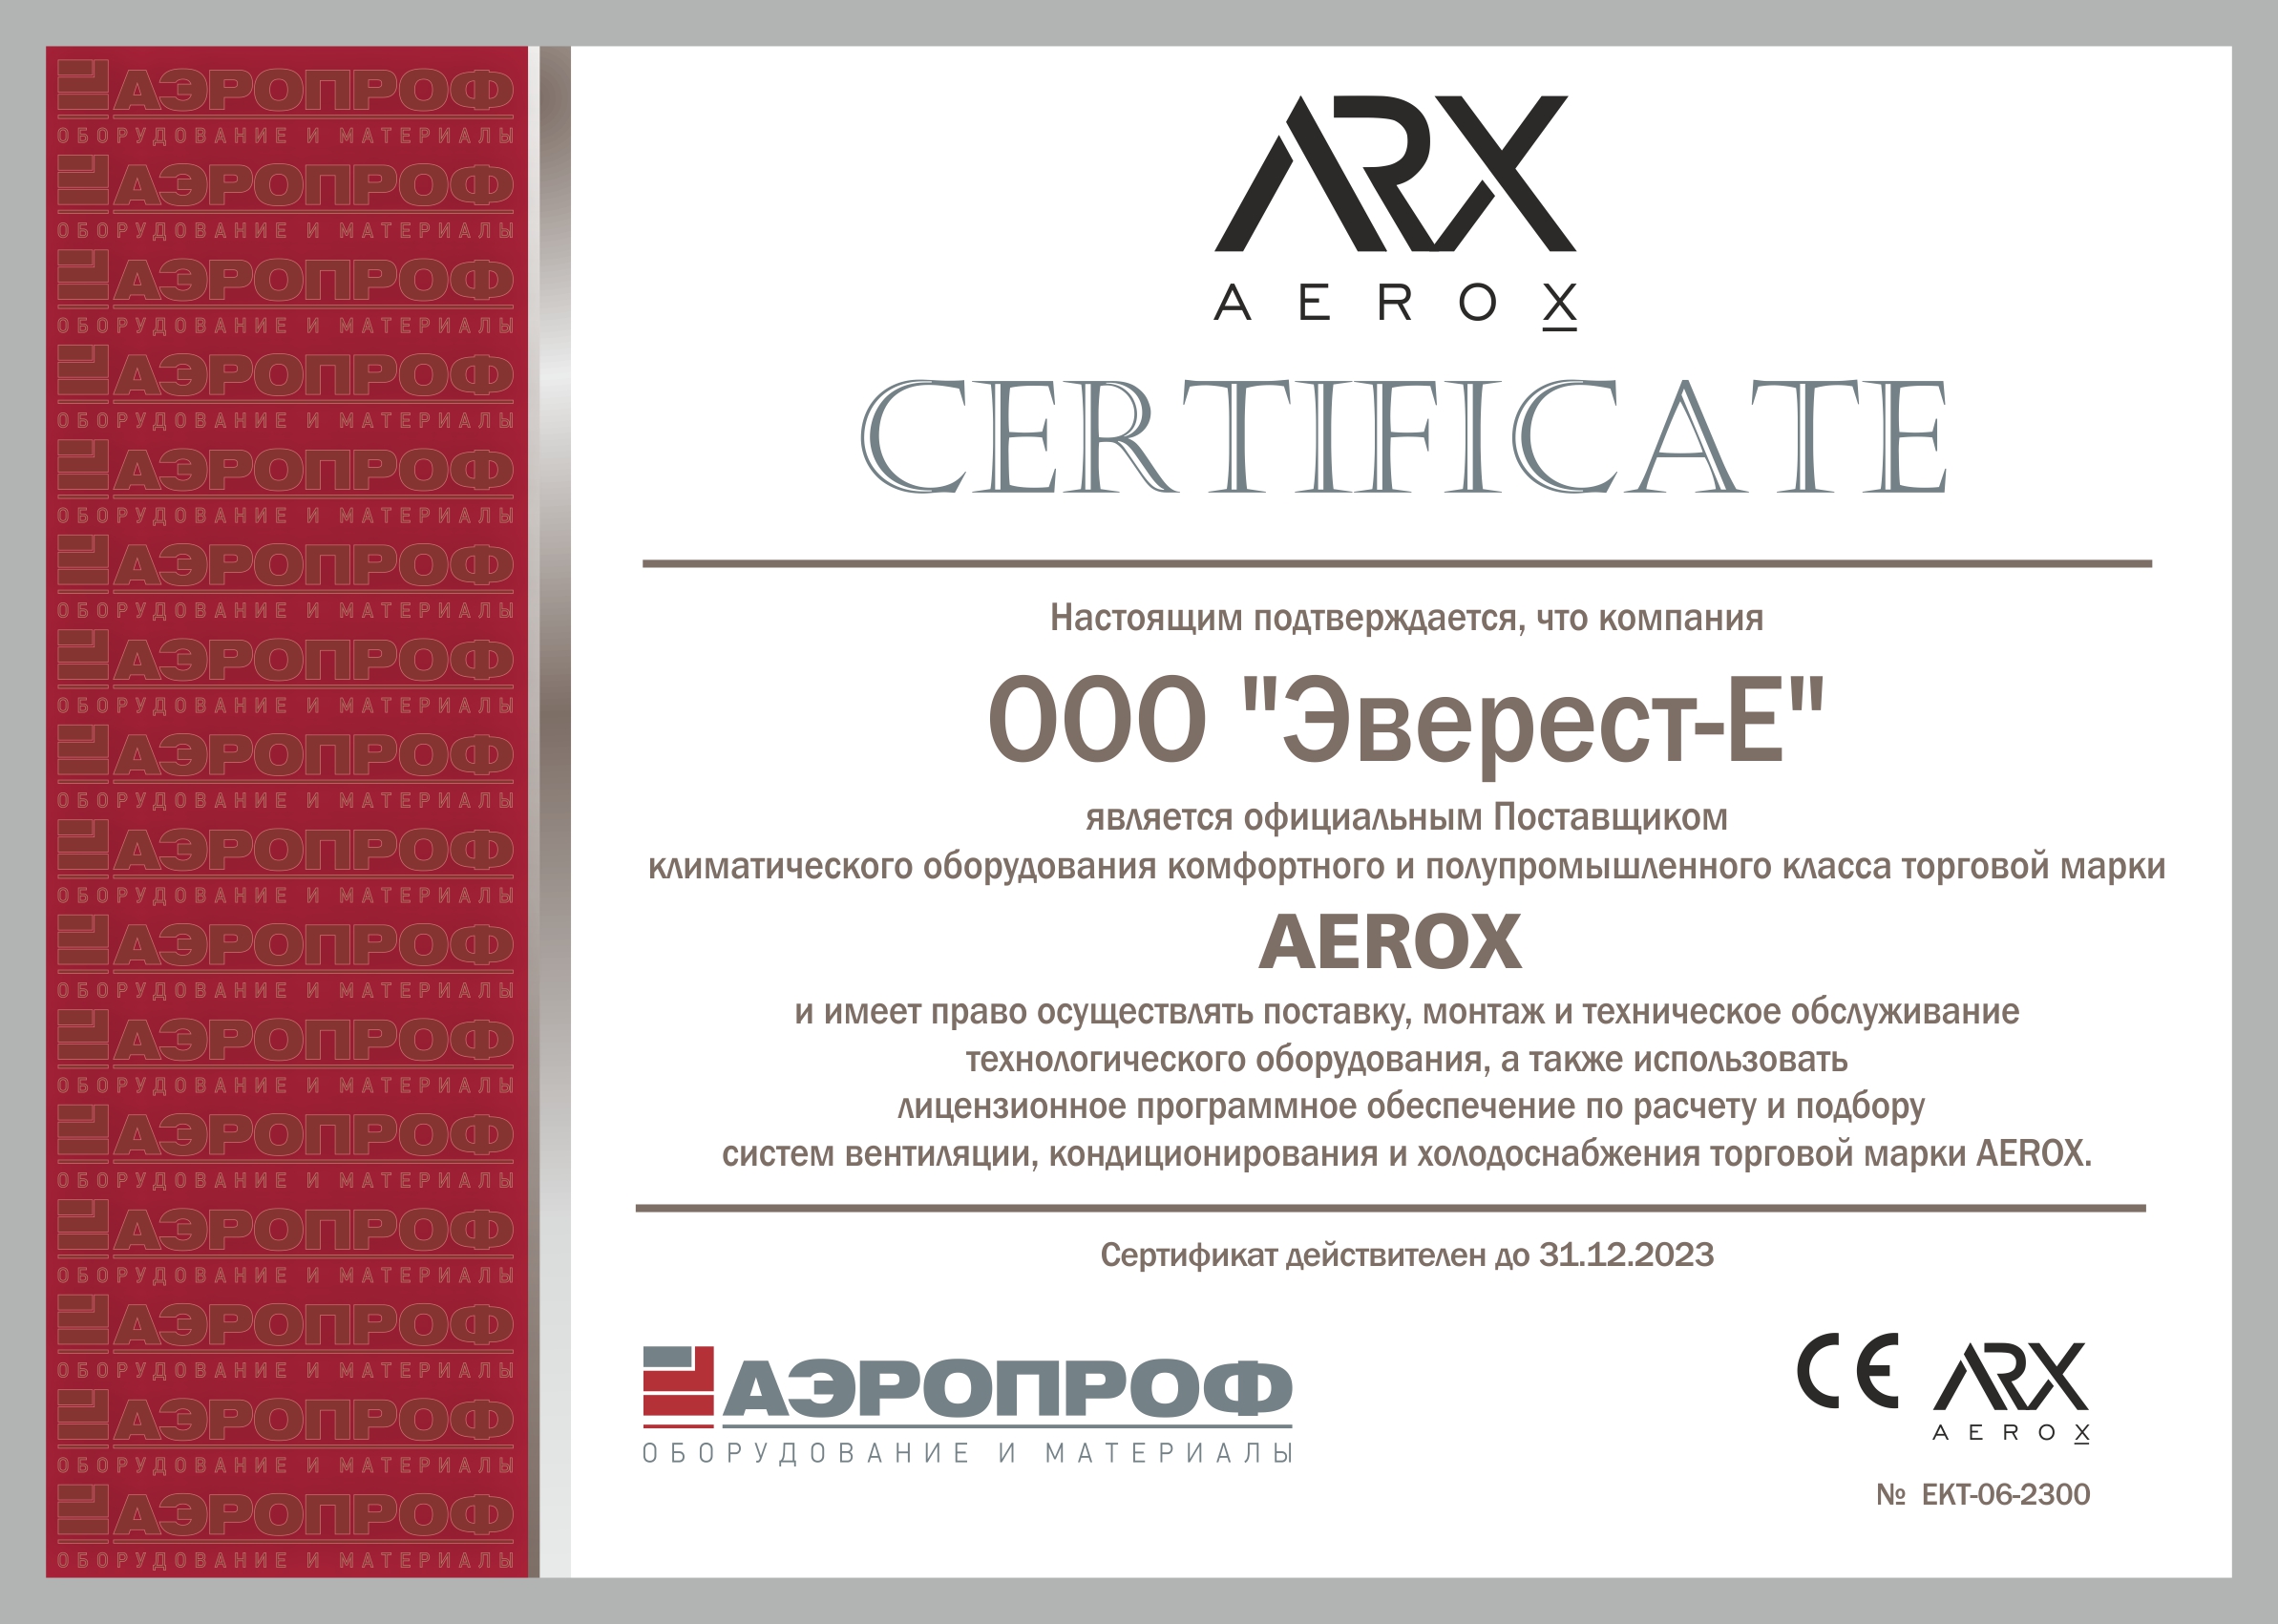 sert23-everest-arx Kondicioner Aero ARS-II-12IHN21D6-01/ARS-II-12OHN21D6-01 kypit v Ekaterinbyrge v internet-magazine KlimatMarket96.ry Сертификат официального дилера